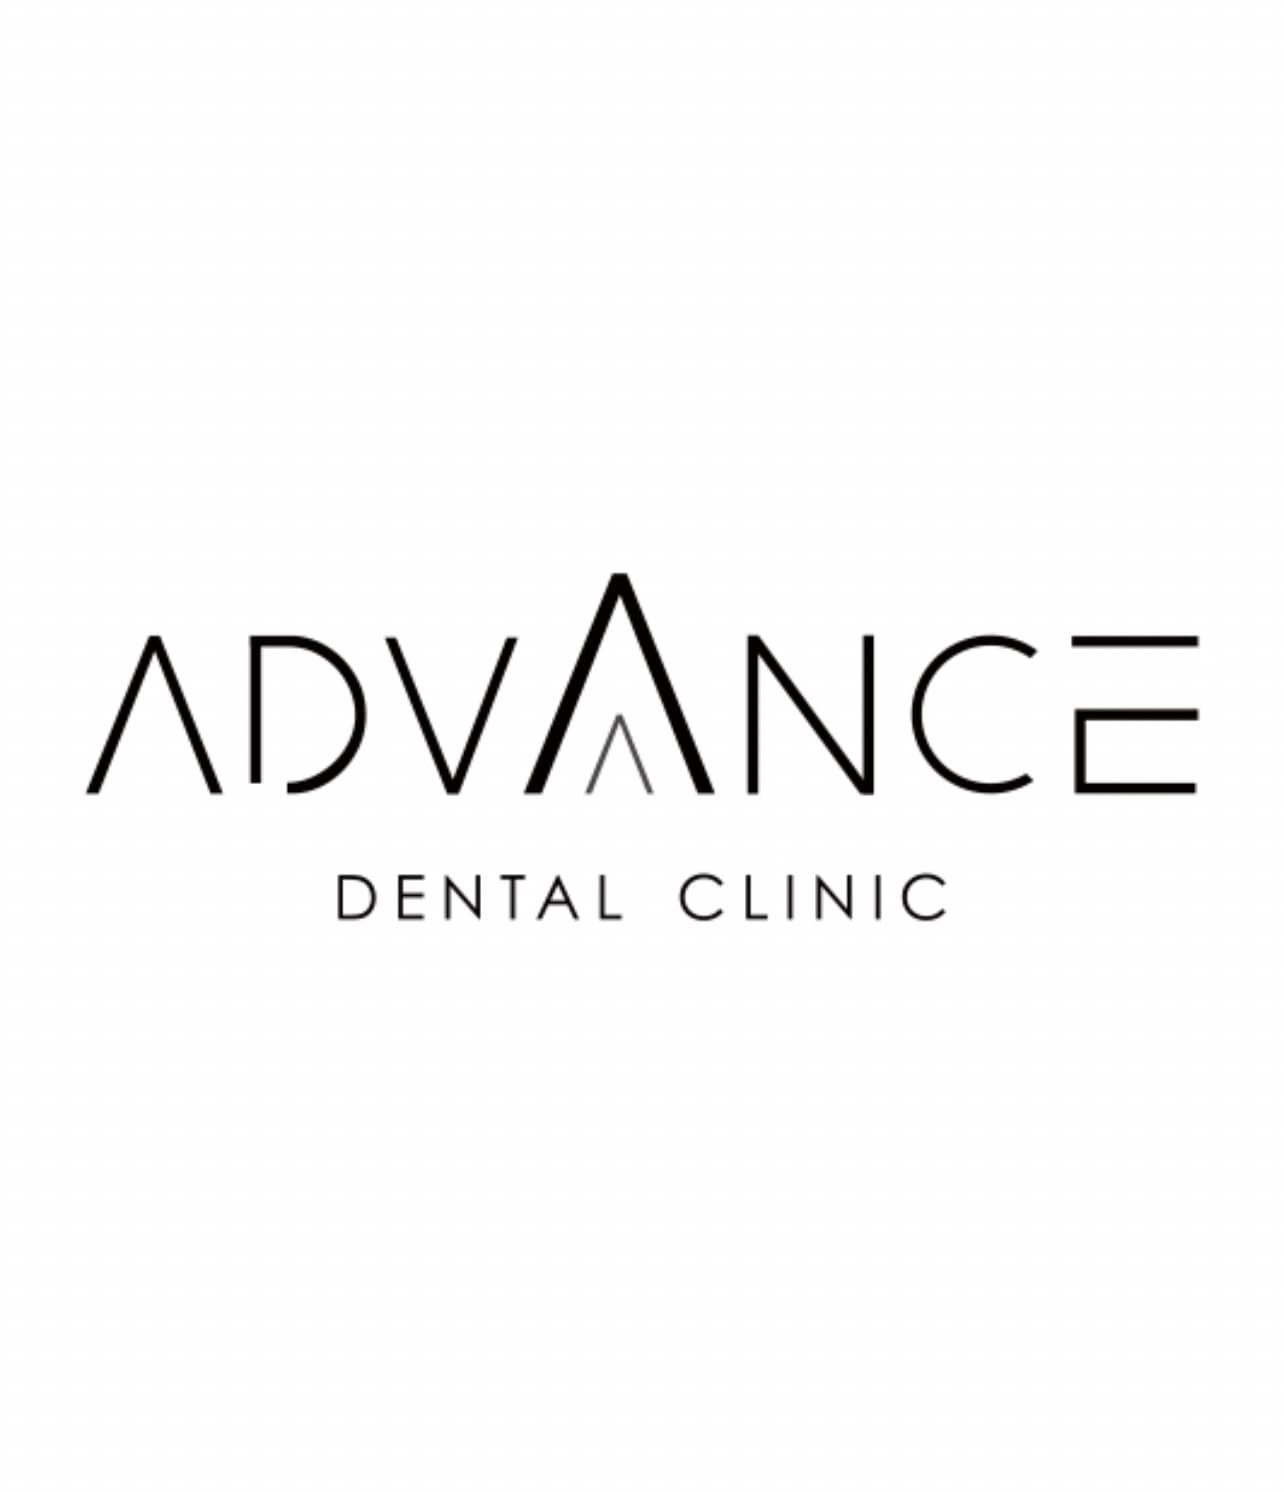 Advance Dental אדבנס דנטל - השתלת שיניים ביום אחד image